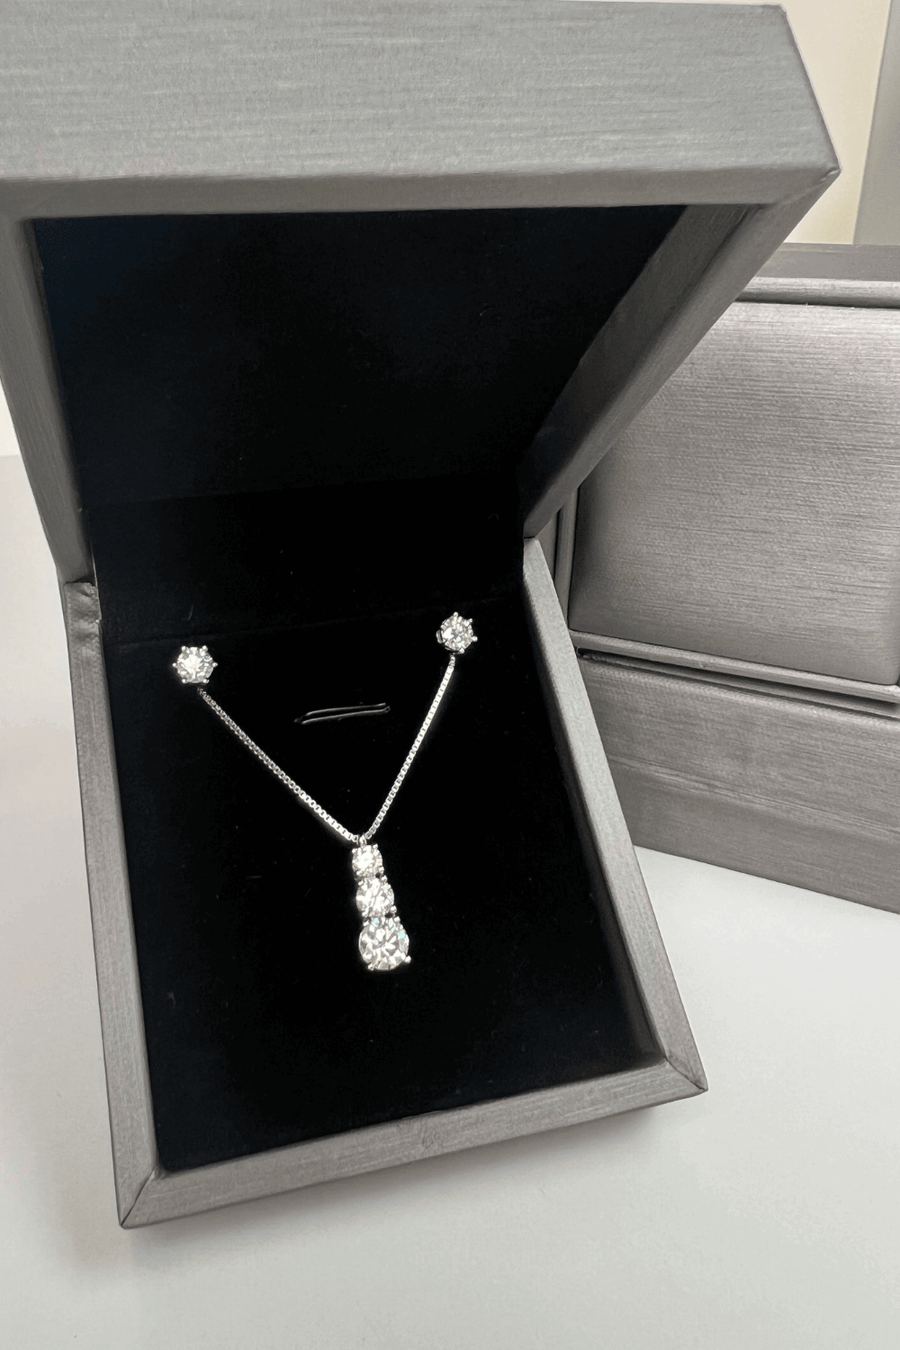 Best Diamond Jewelry Bundle Set Gift | Best Triple Diamond Necklace, Earrings Jewelry Gift for Women, Mother, Wife, Daughter | MASON New York